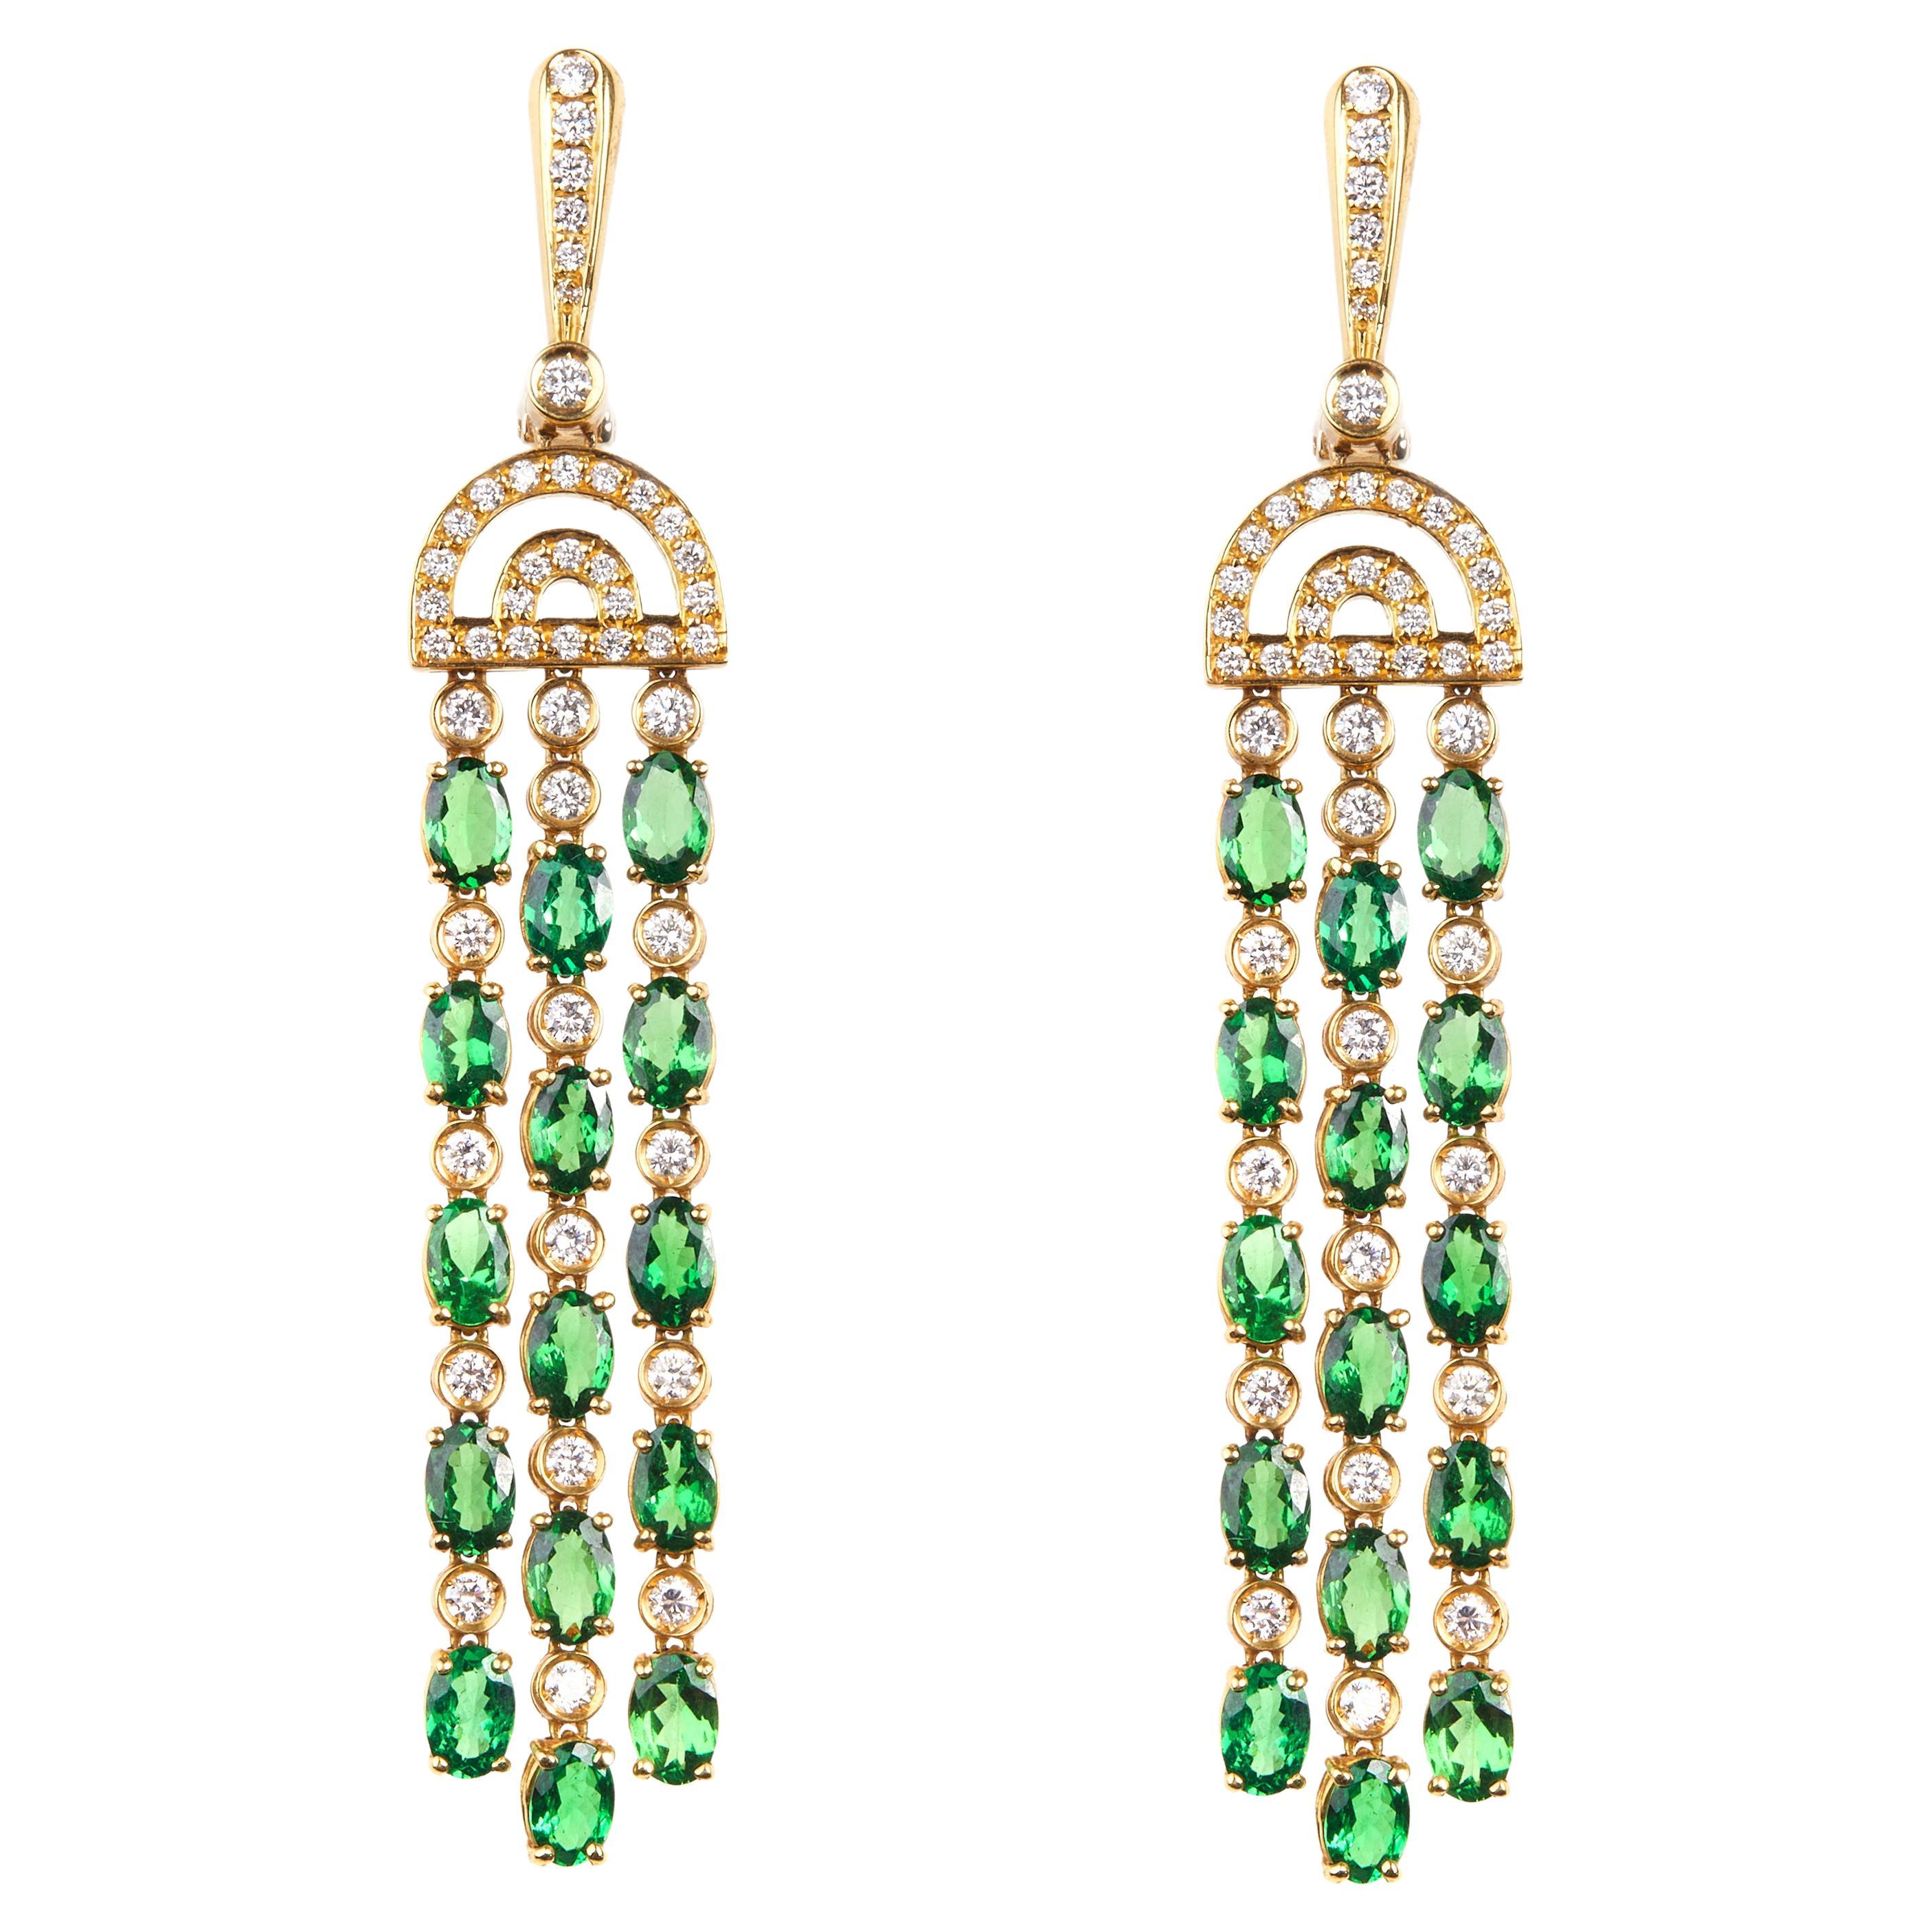 18 Karat Yelow Gold Tsavorite and Diamond Dangle Earrings